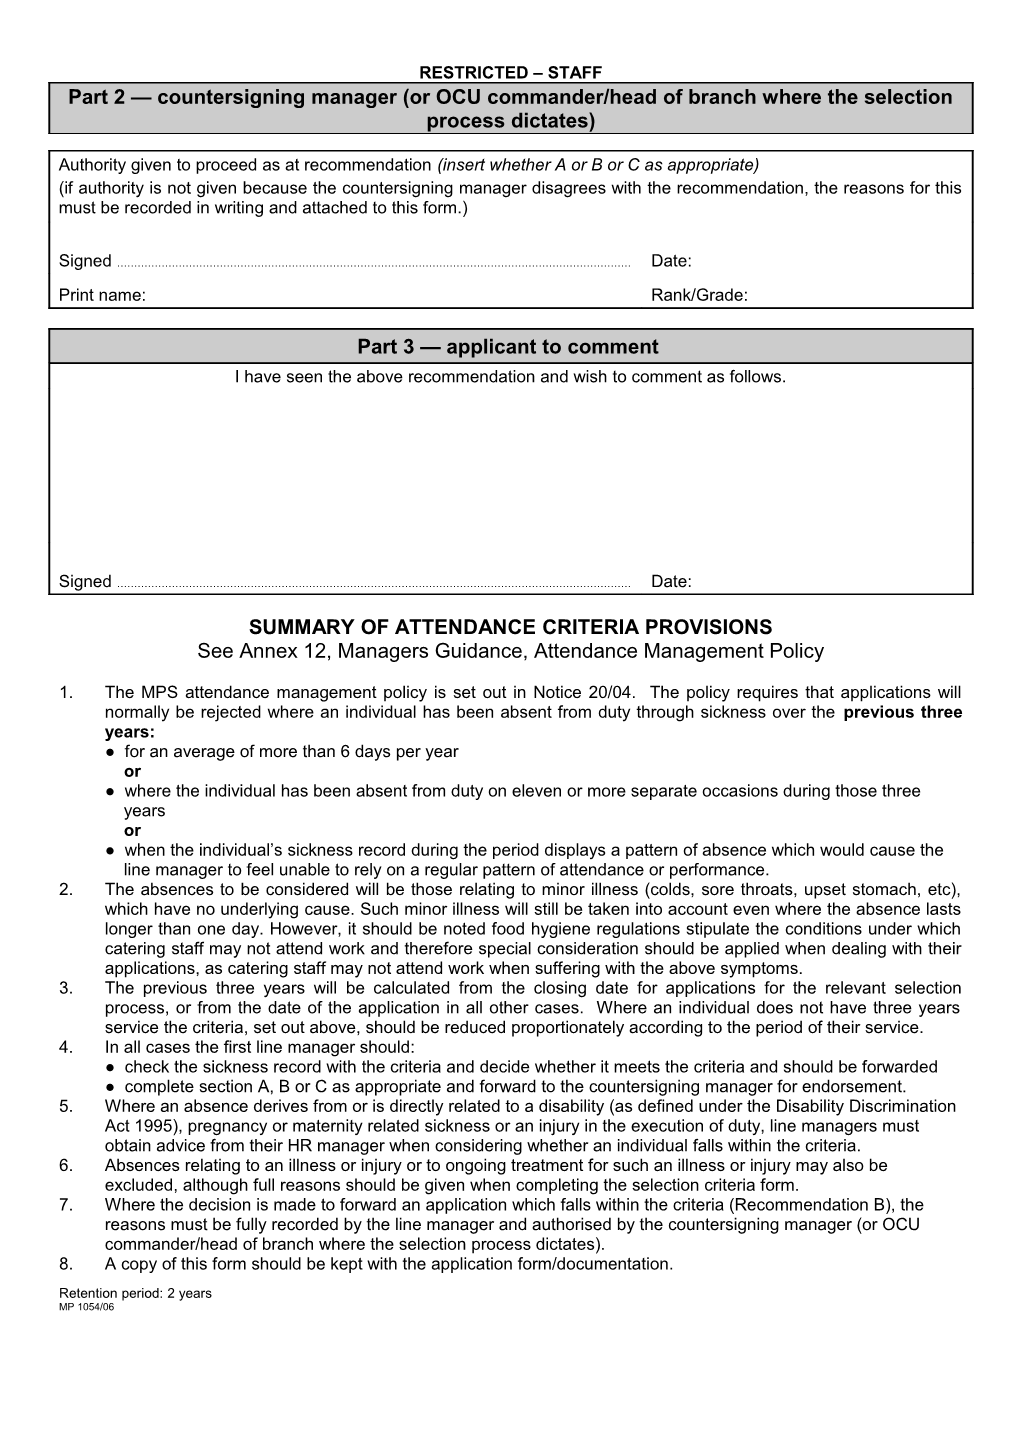 Form 456 - Attendance Management Selection Criteria